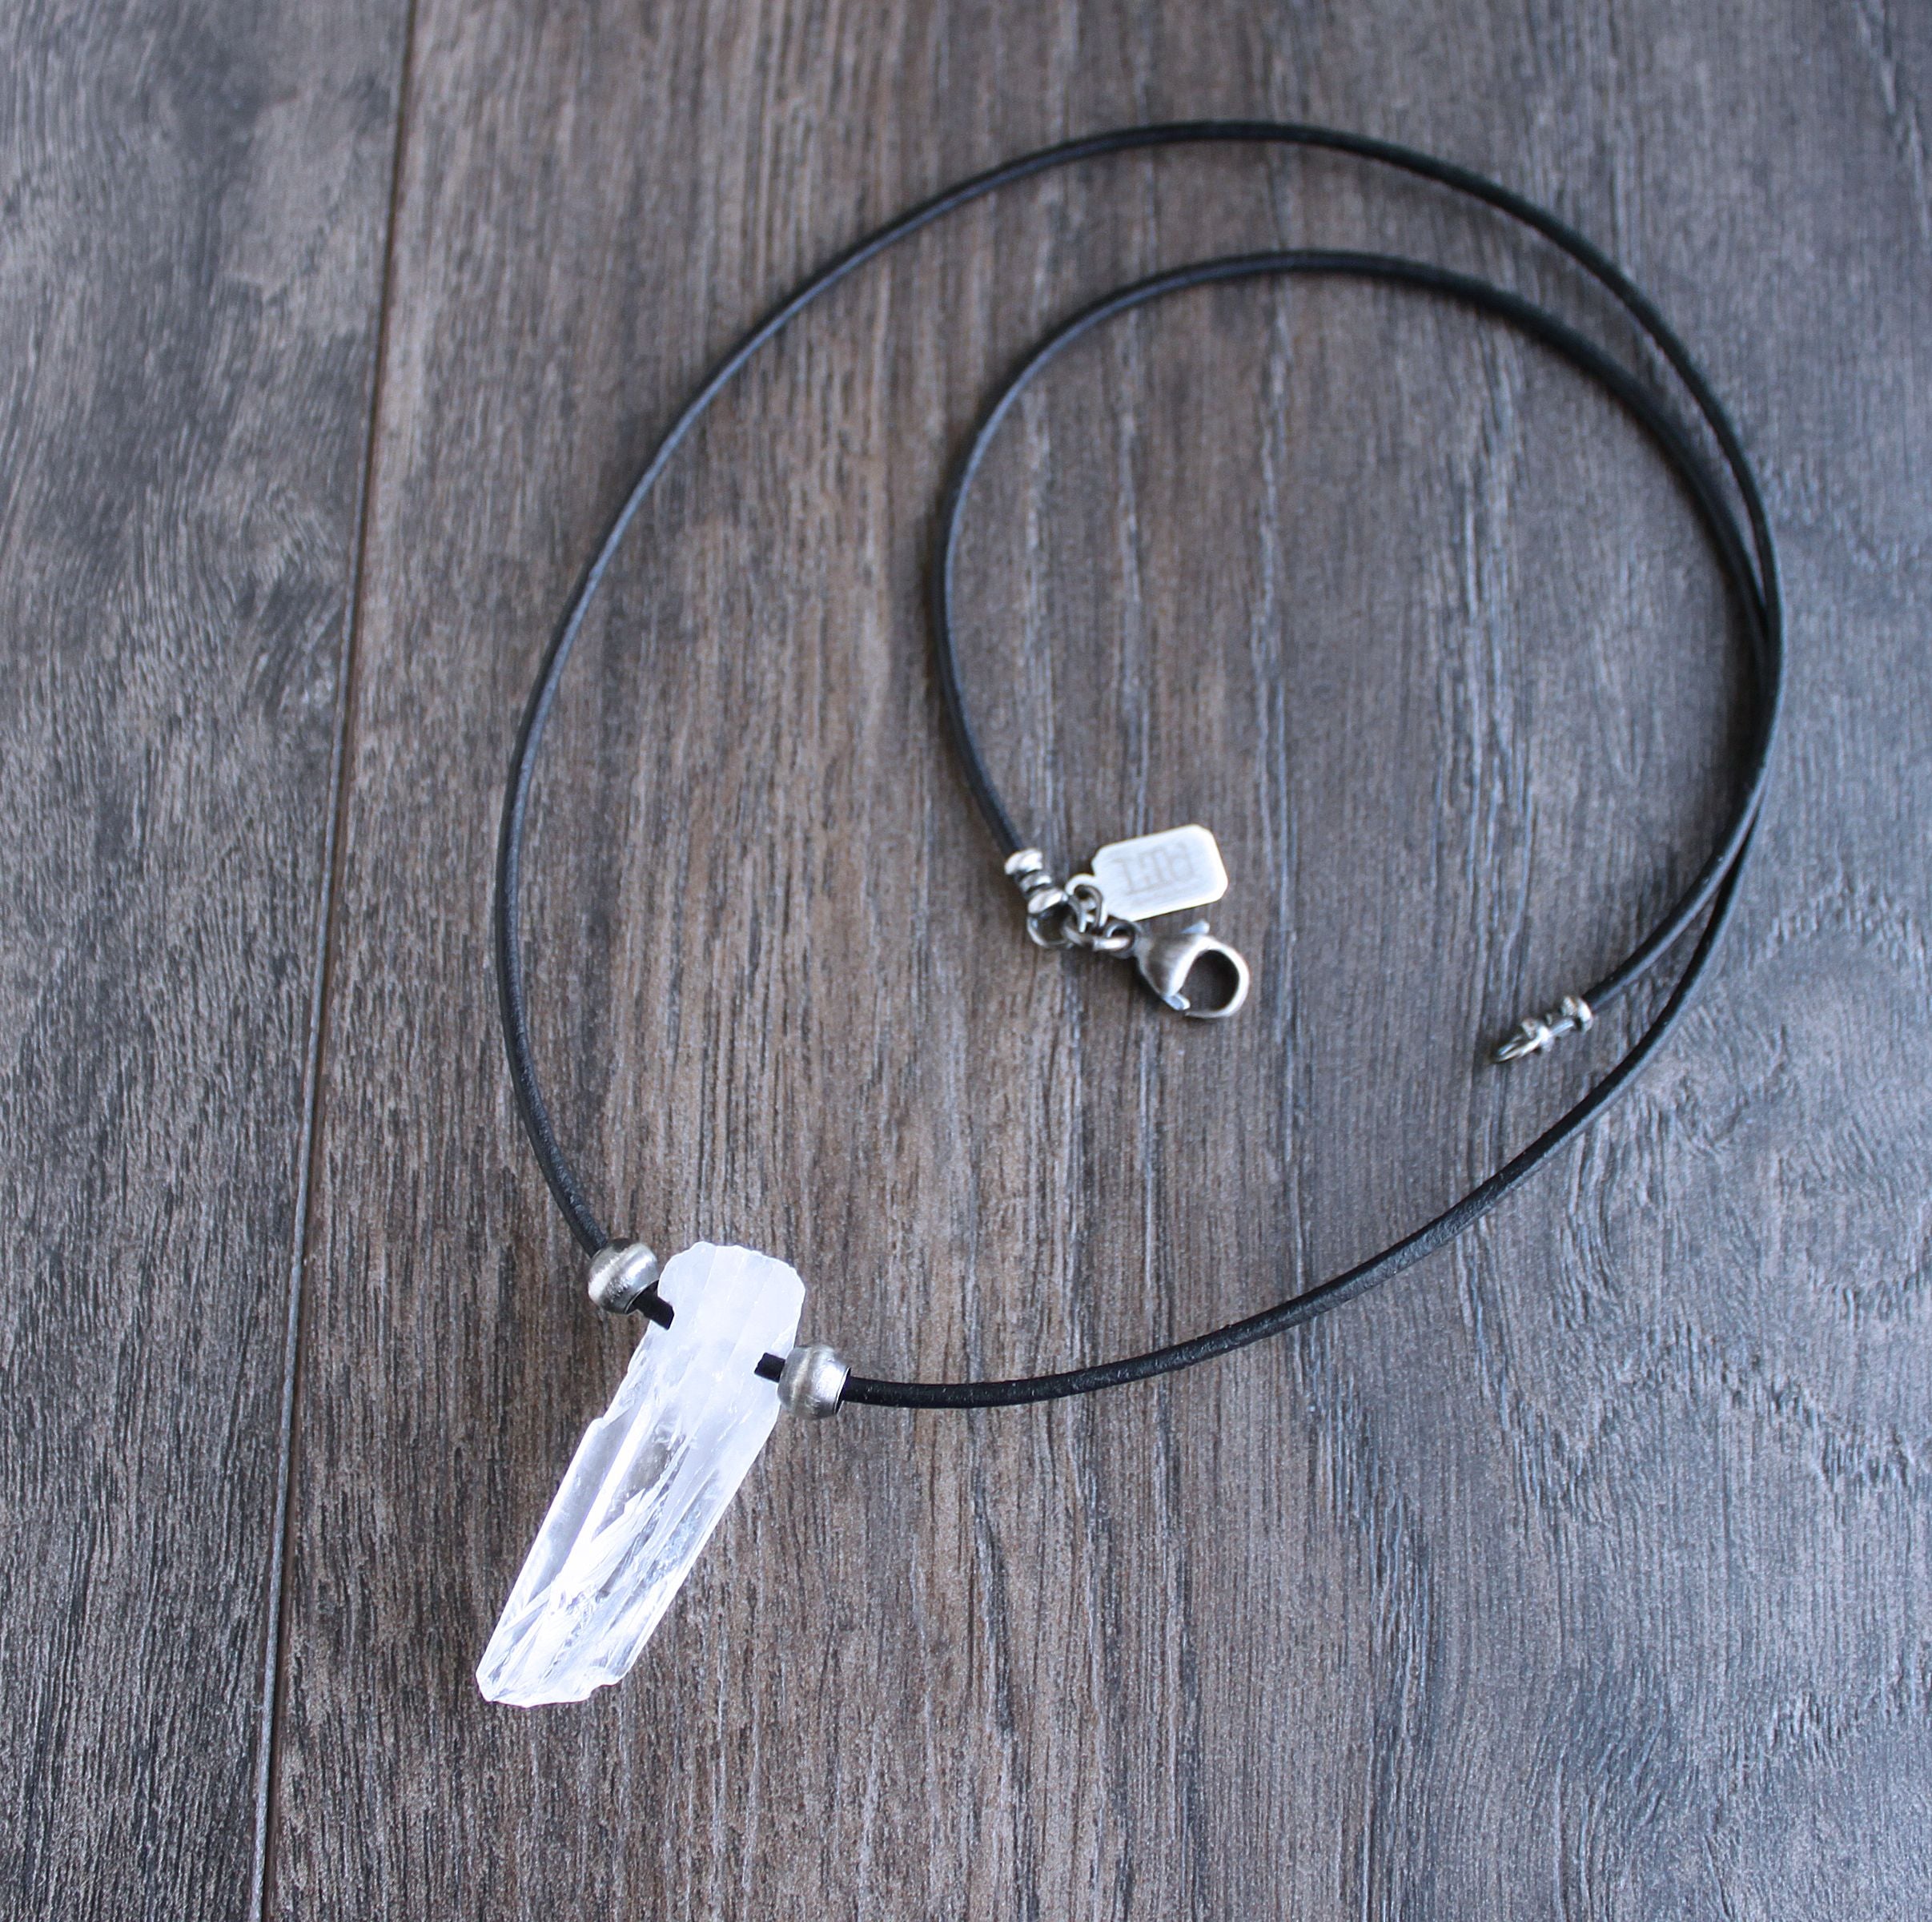 Gemstone Bullet Pendant Healing Quartz Crystal St Steel Chain Men Necklace  | eBay